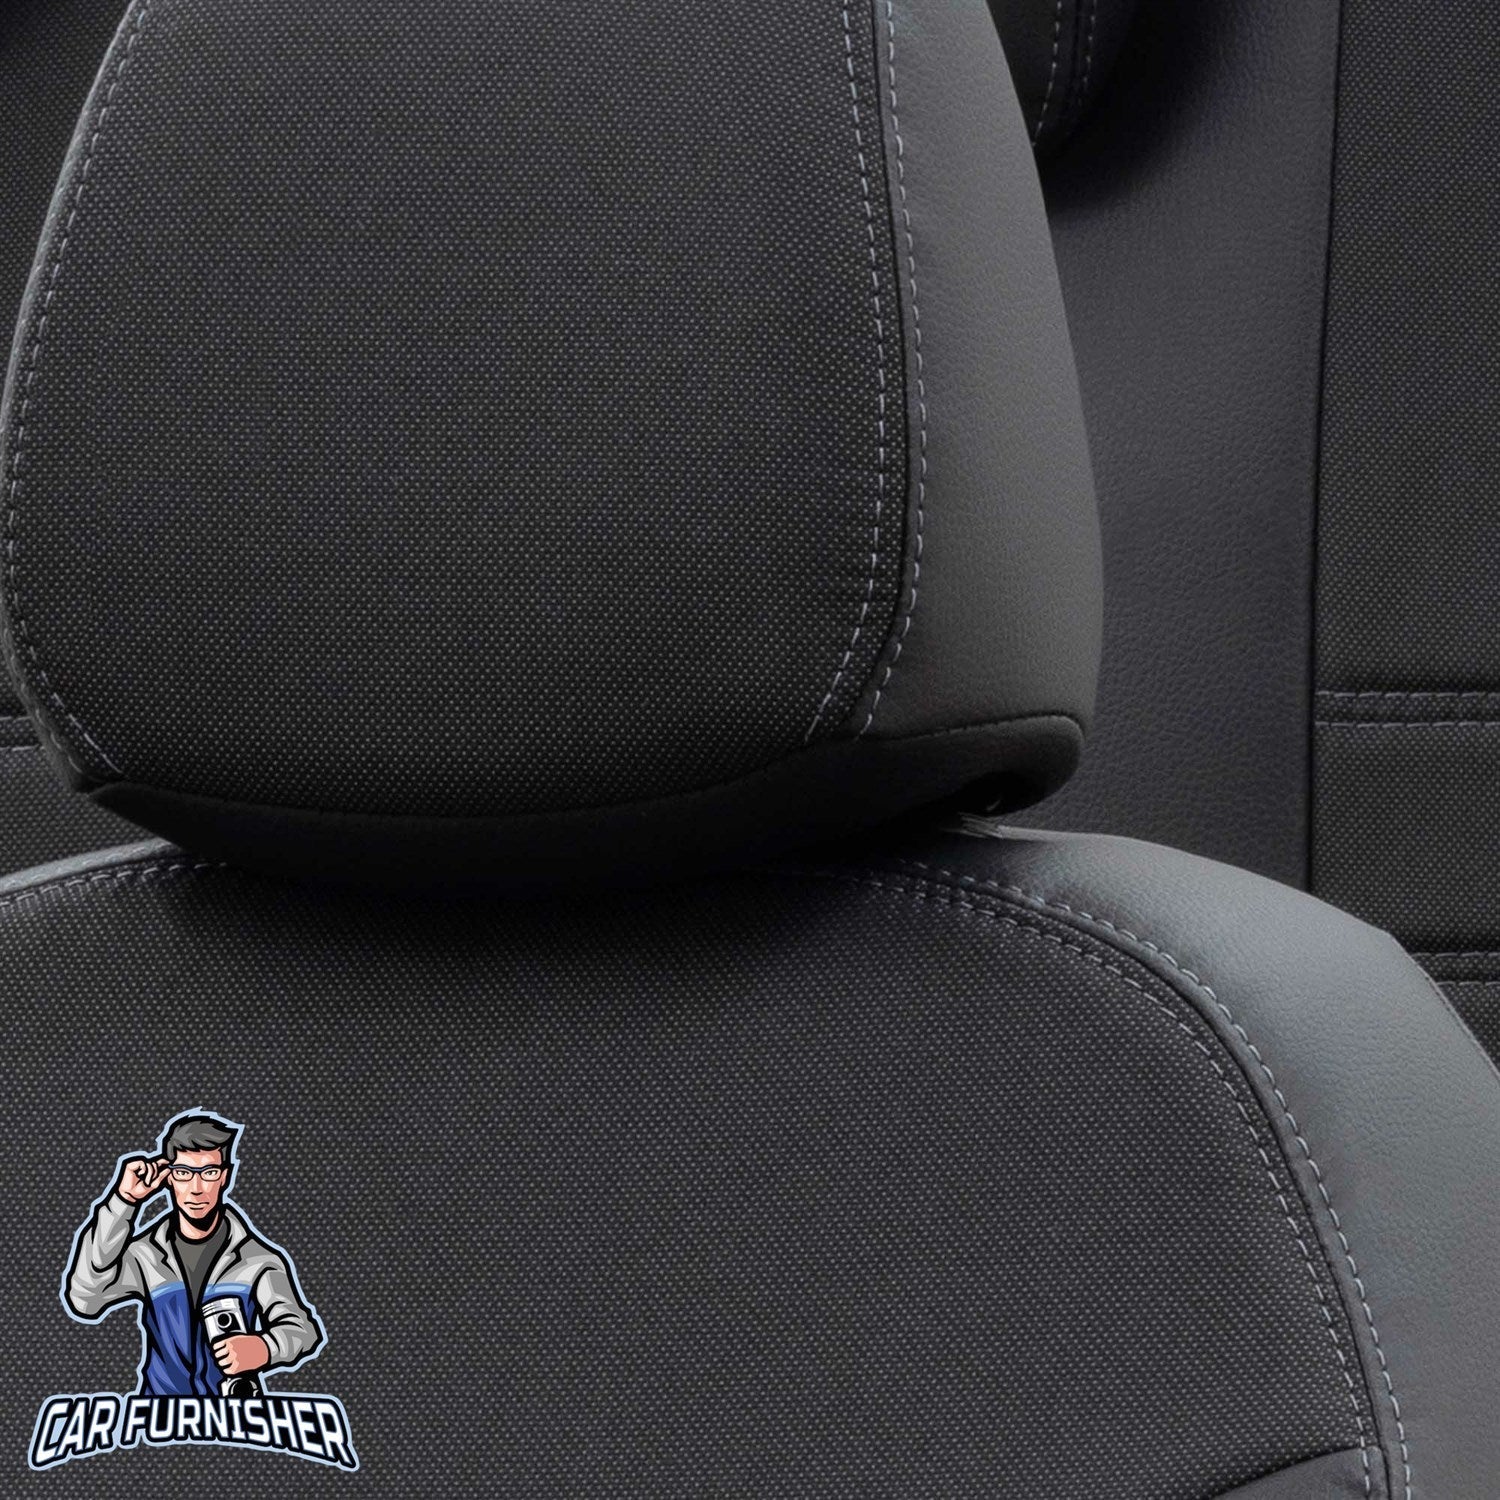 Renault Scenic Seat Covers Paris Leather & Jacquard Design Black Leather & Jacquard Fabric